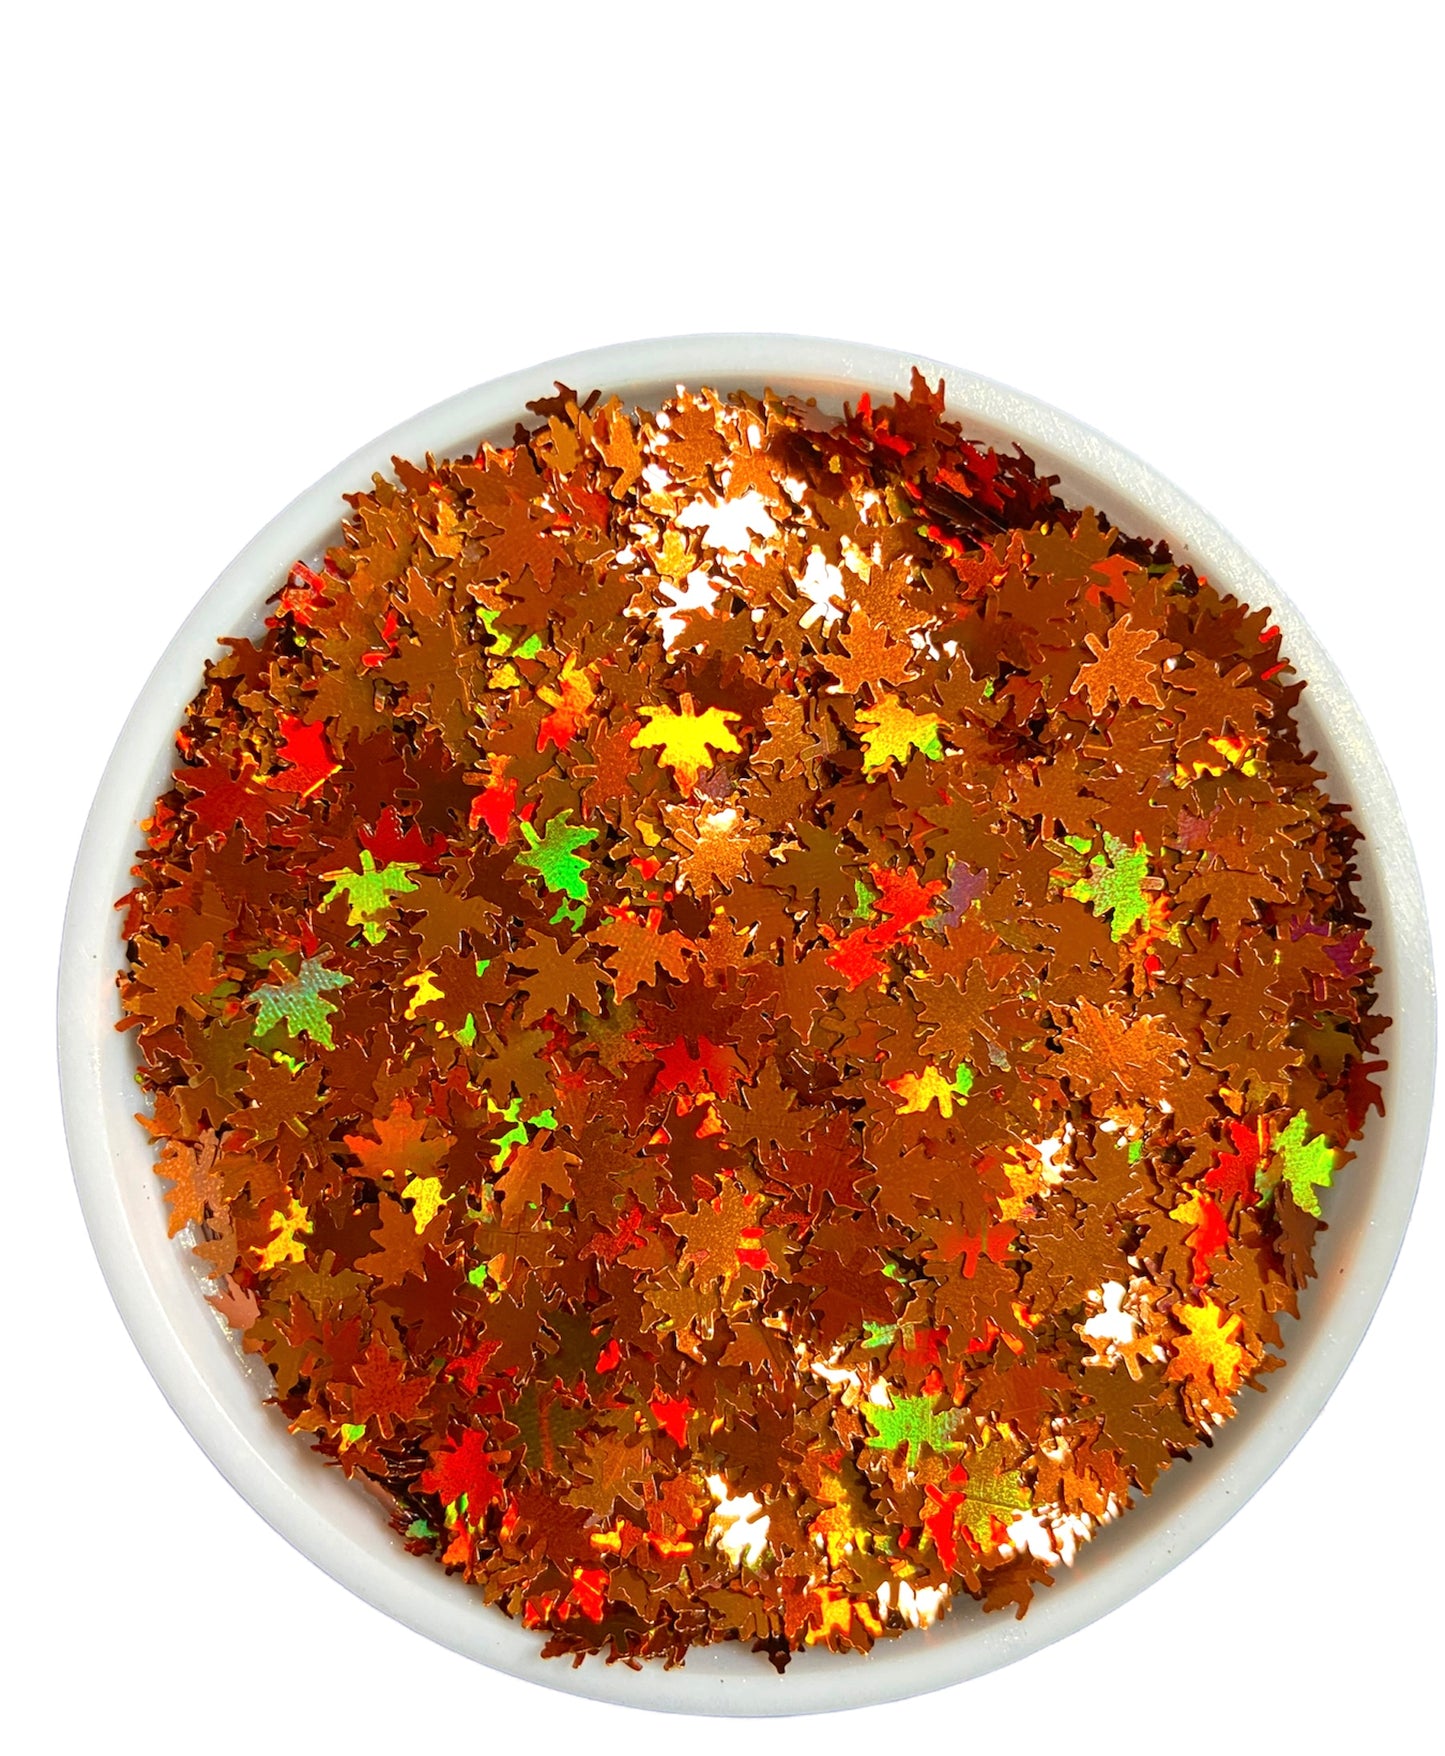 Fall maple leaves glitter shape